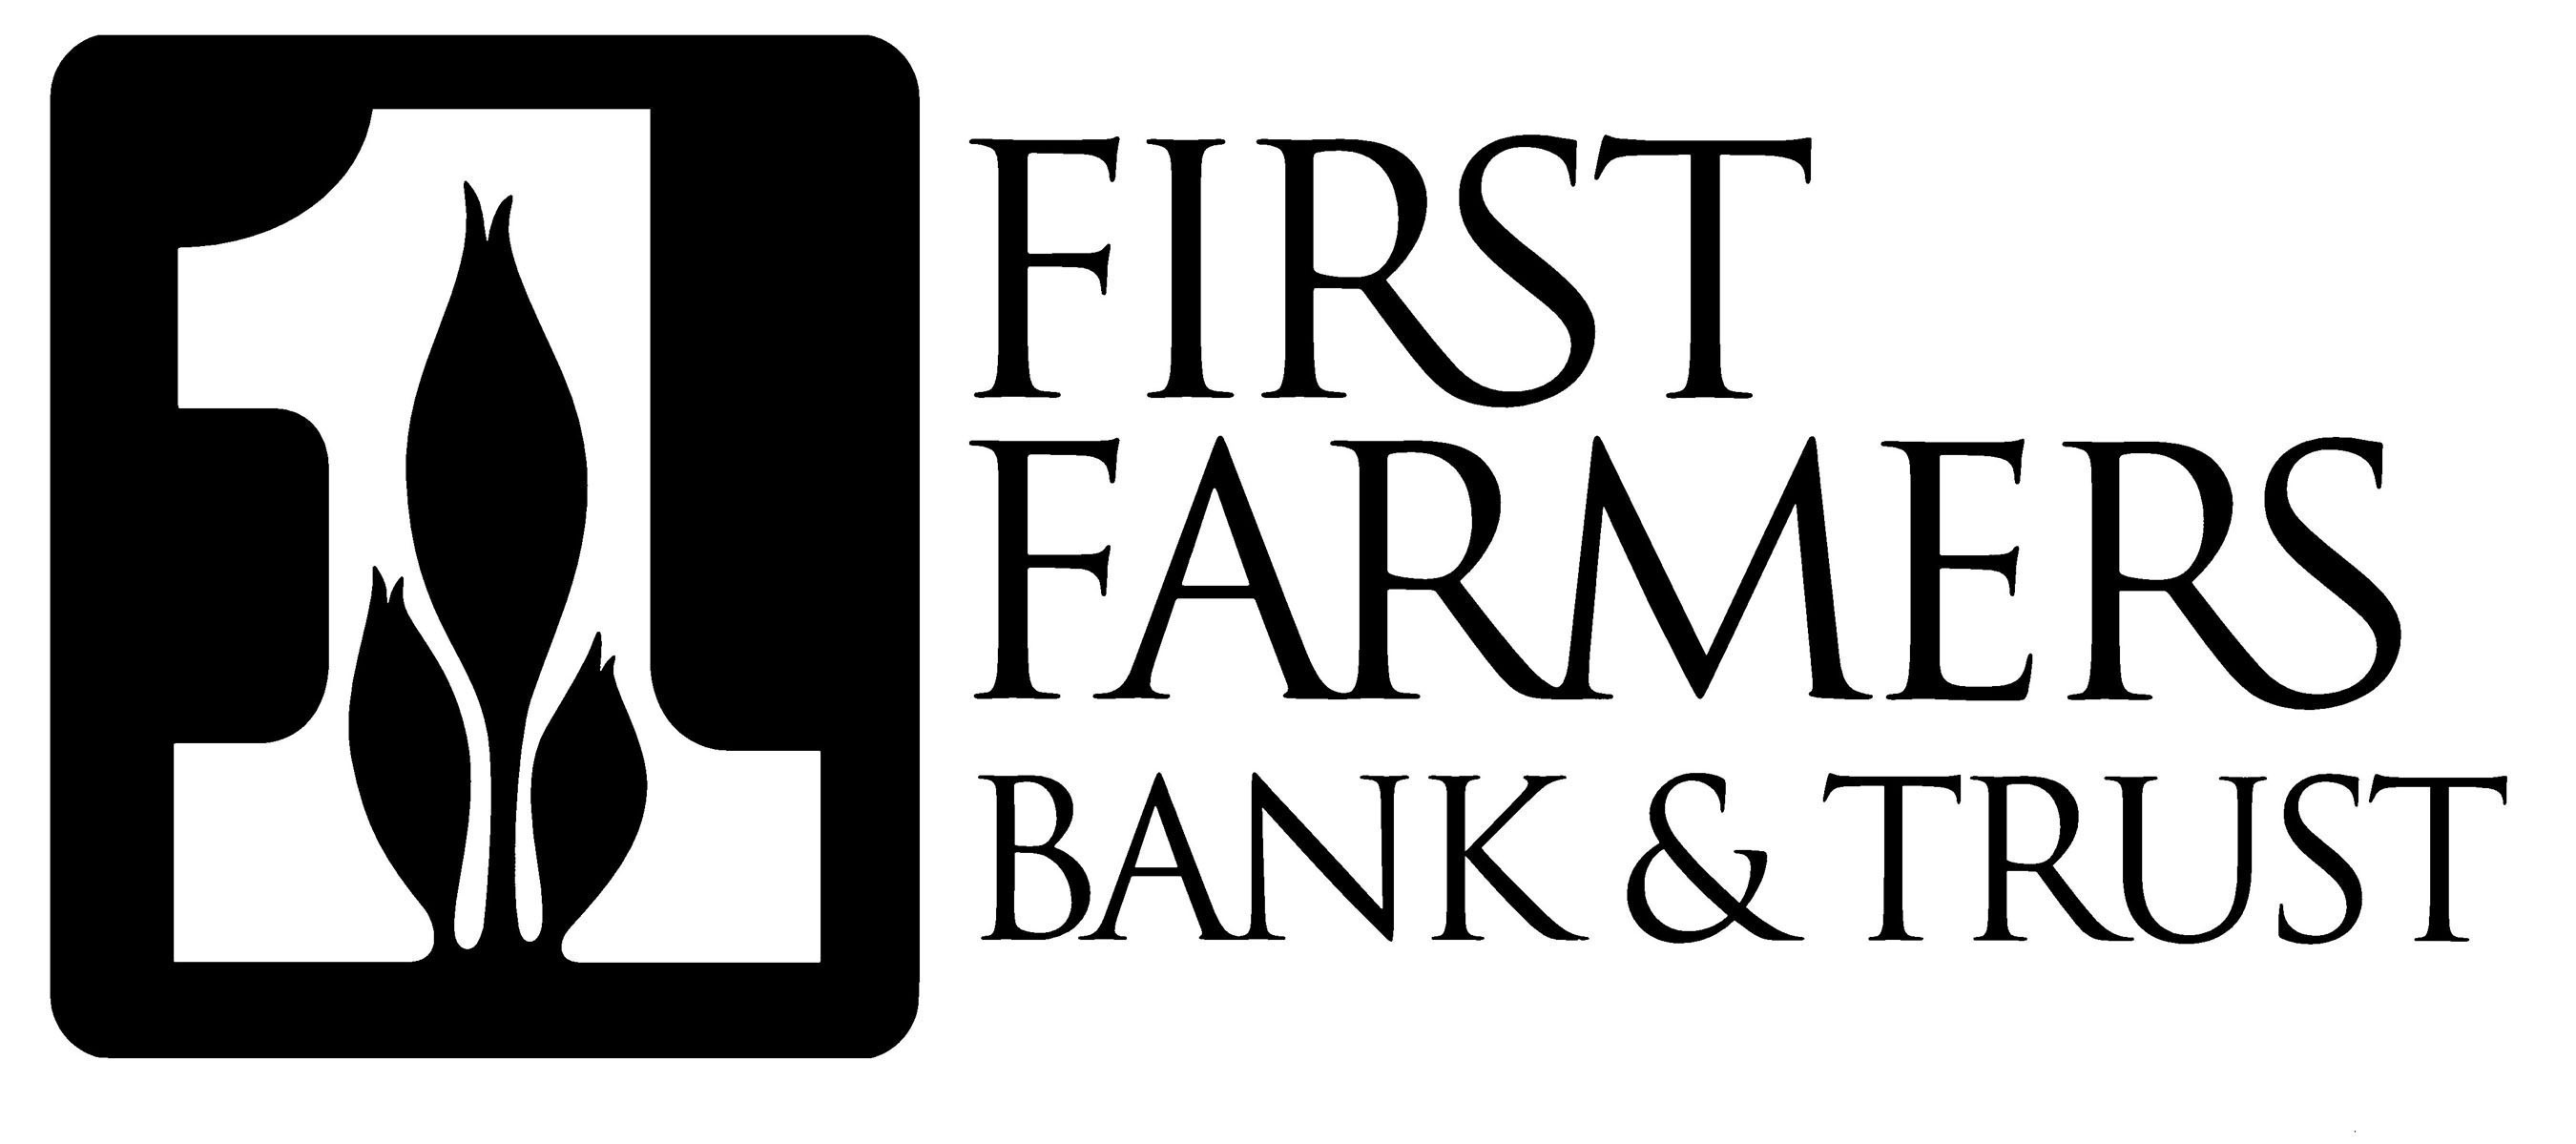 First Farmers Bank & Trust Logo.